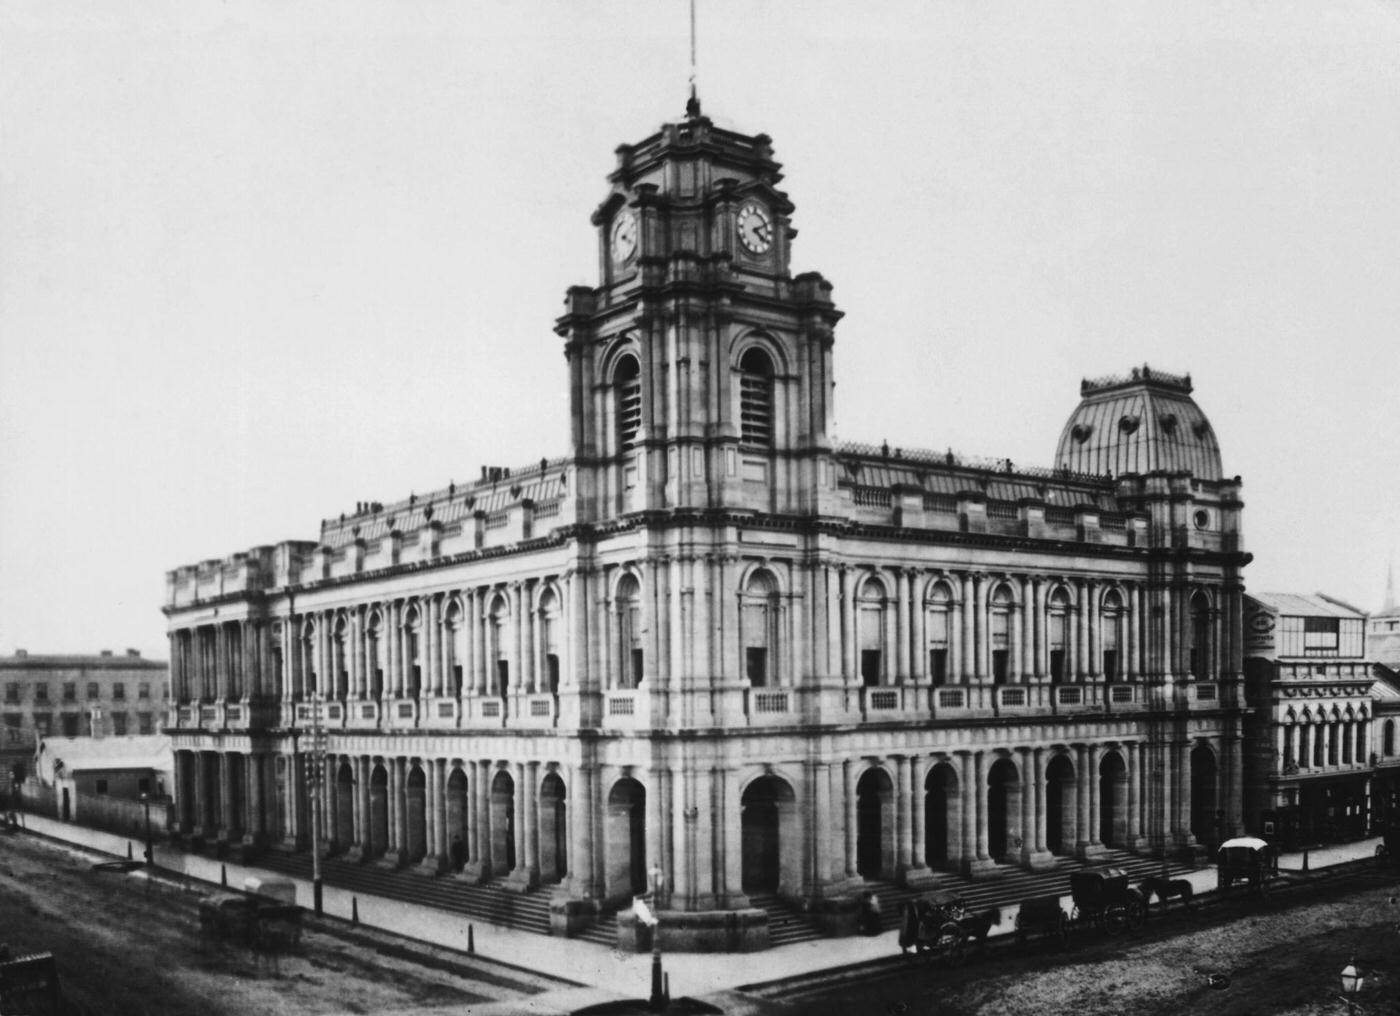 The Melbourne General Post Office on the corner of Elizabeth Street and Bourke Street, Melbourne, 1880